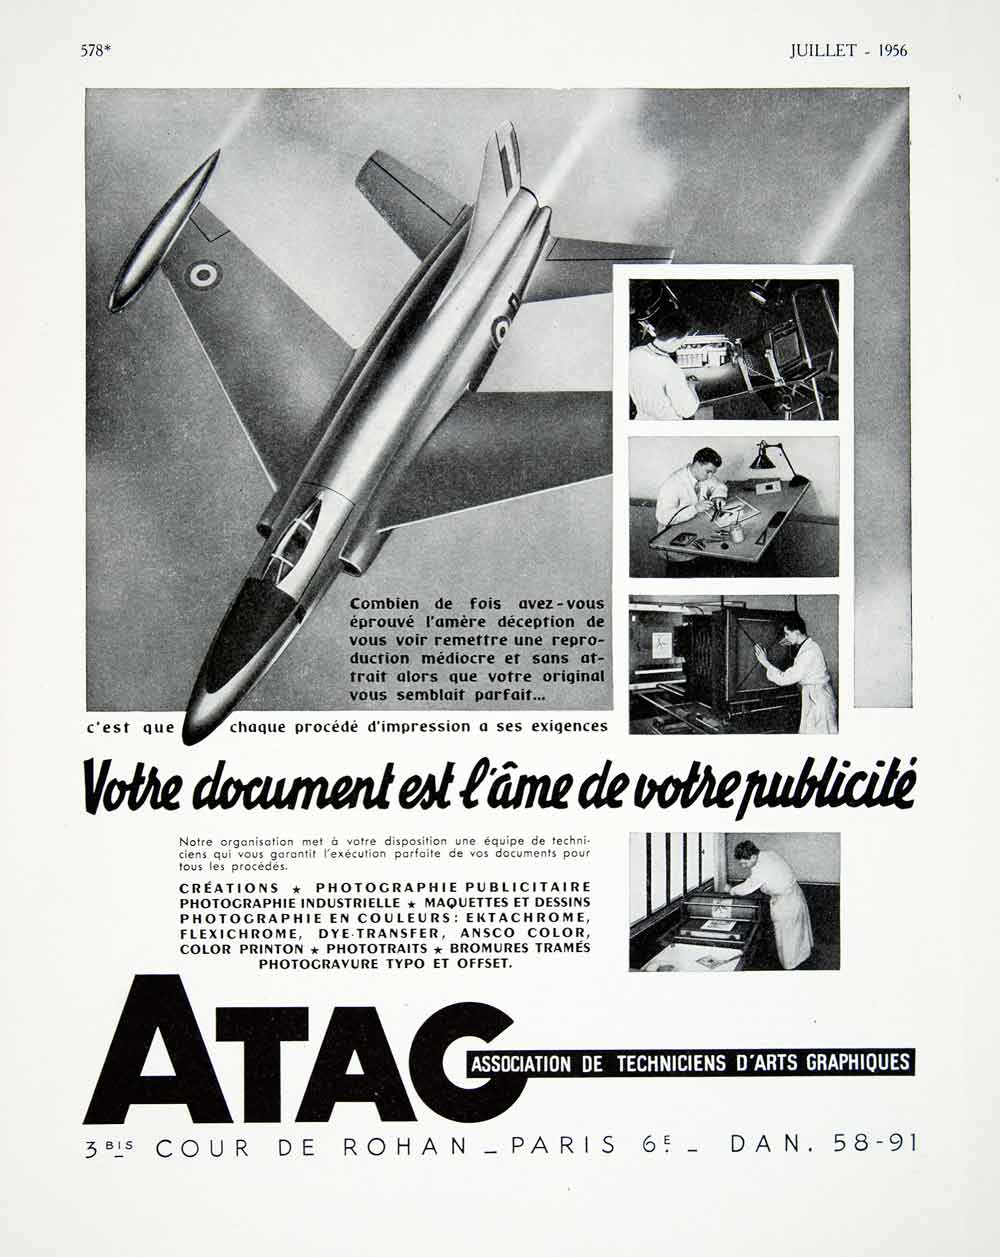 1956 Ad ATAG Association Techniciens D'Art Graphiques French Technical VEN6